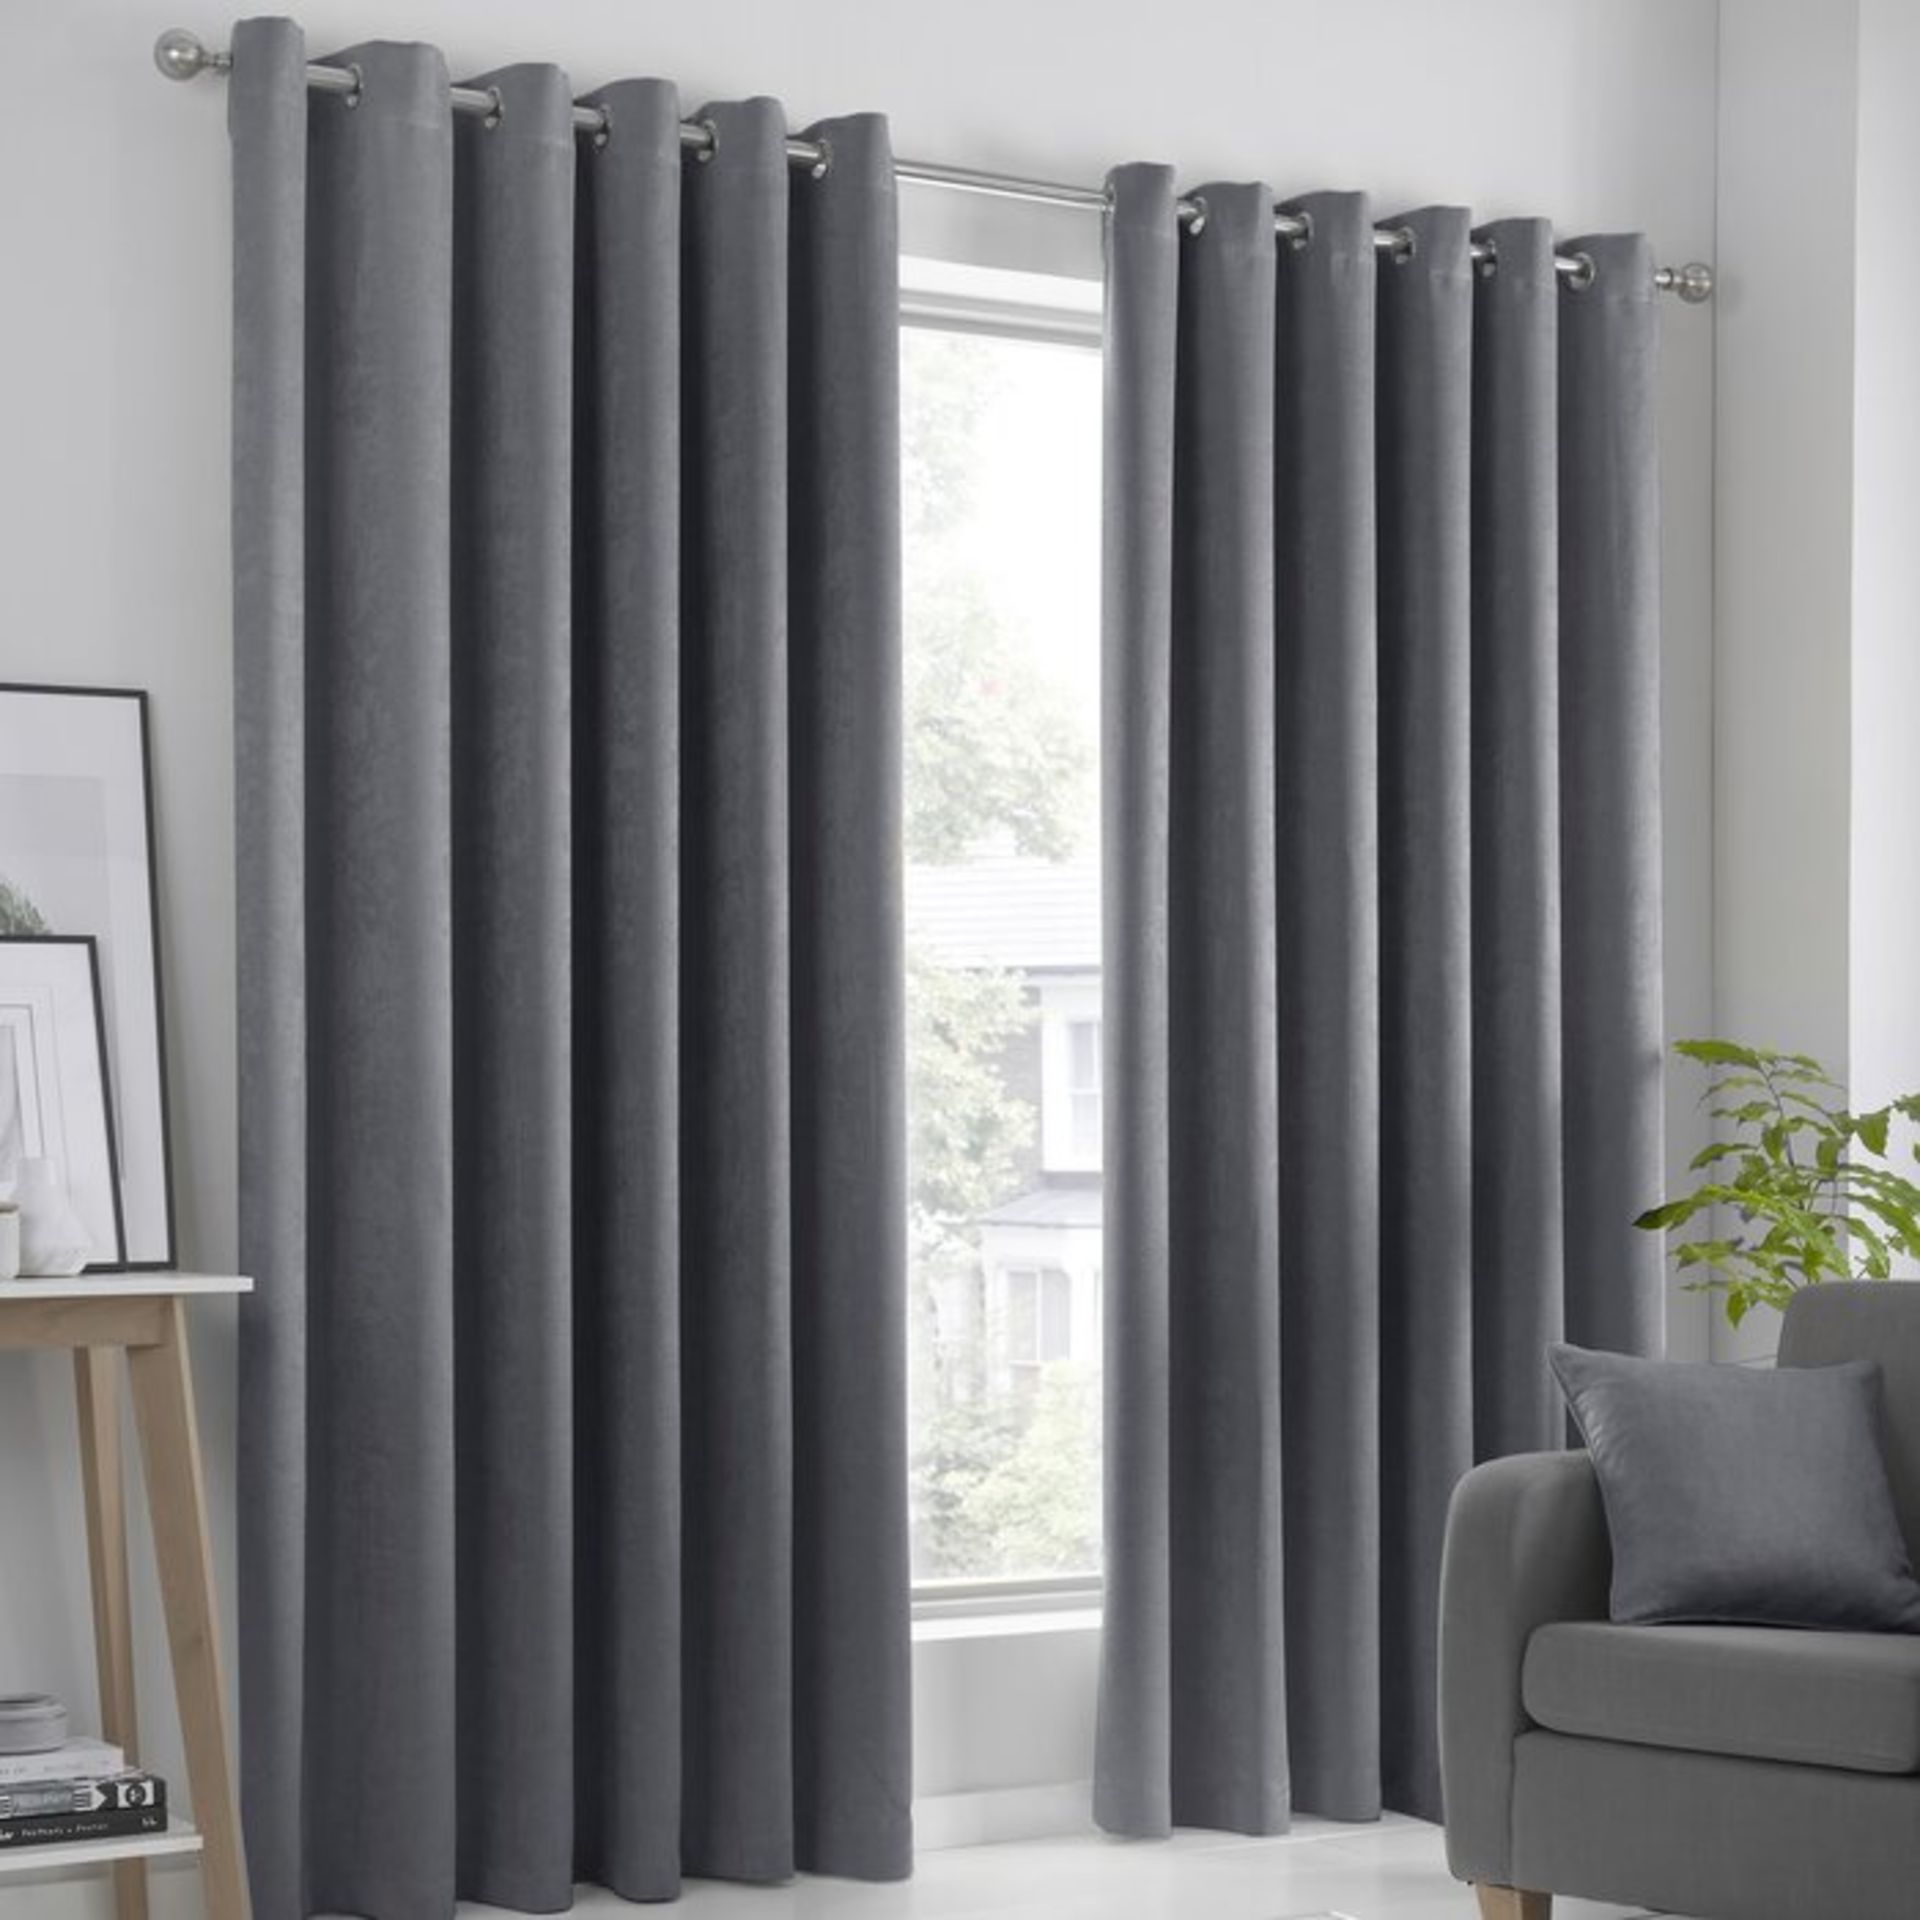 Ouida Eyelet Room Darkening Thermal Curtains (Set of 2) - RRP £30.99